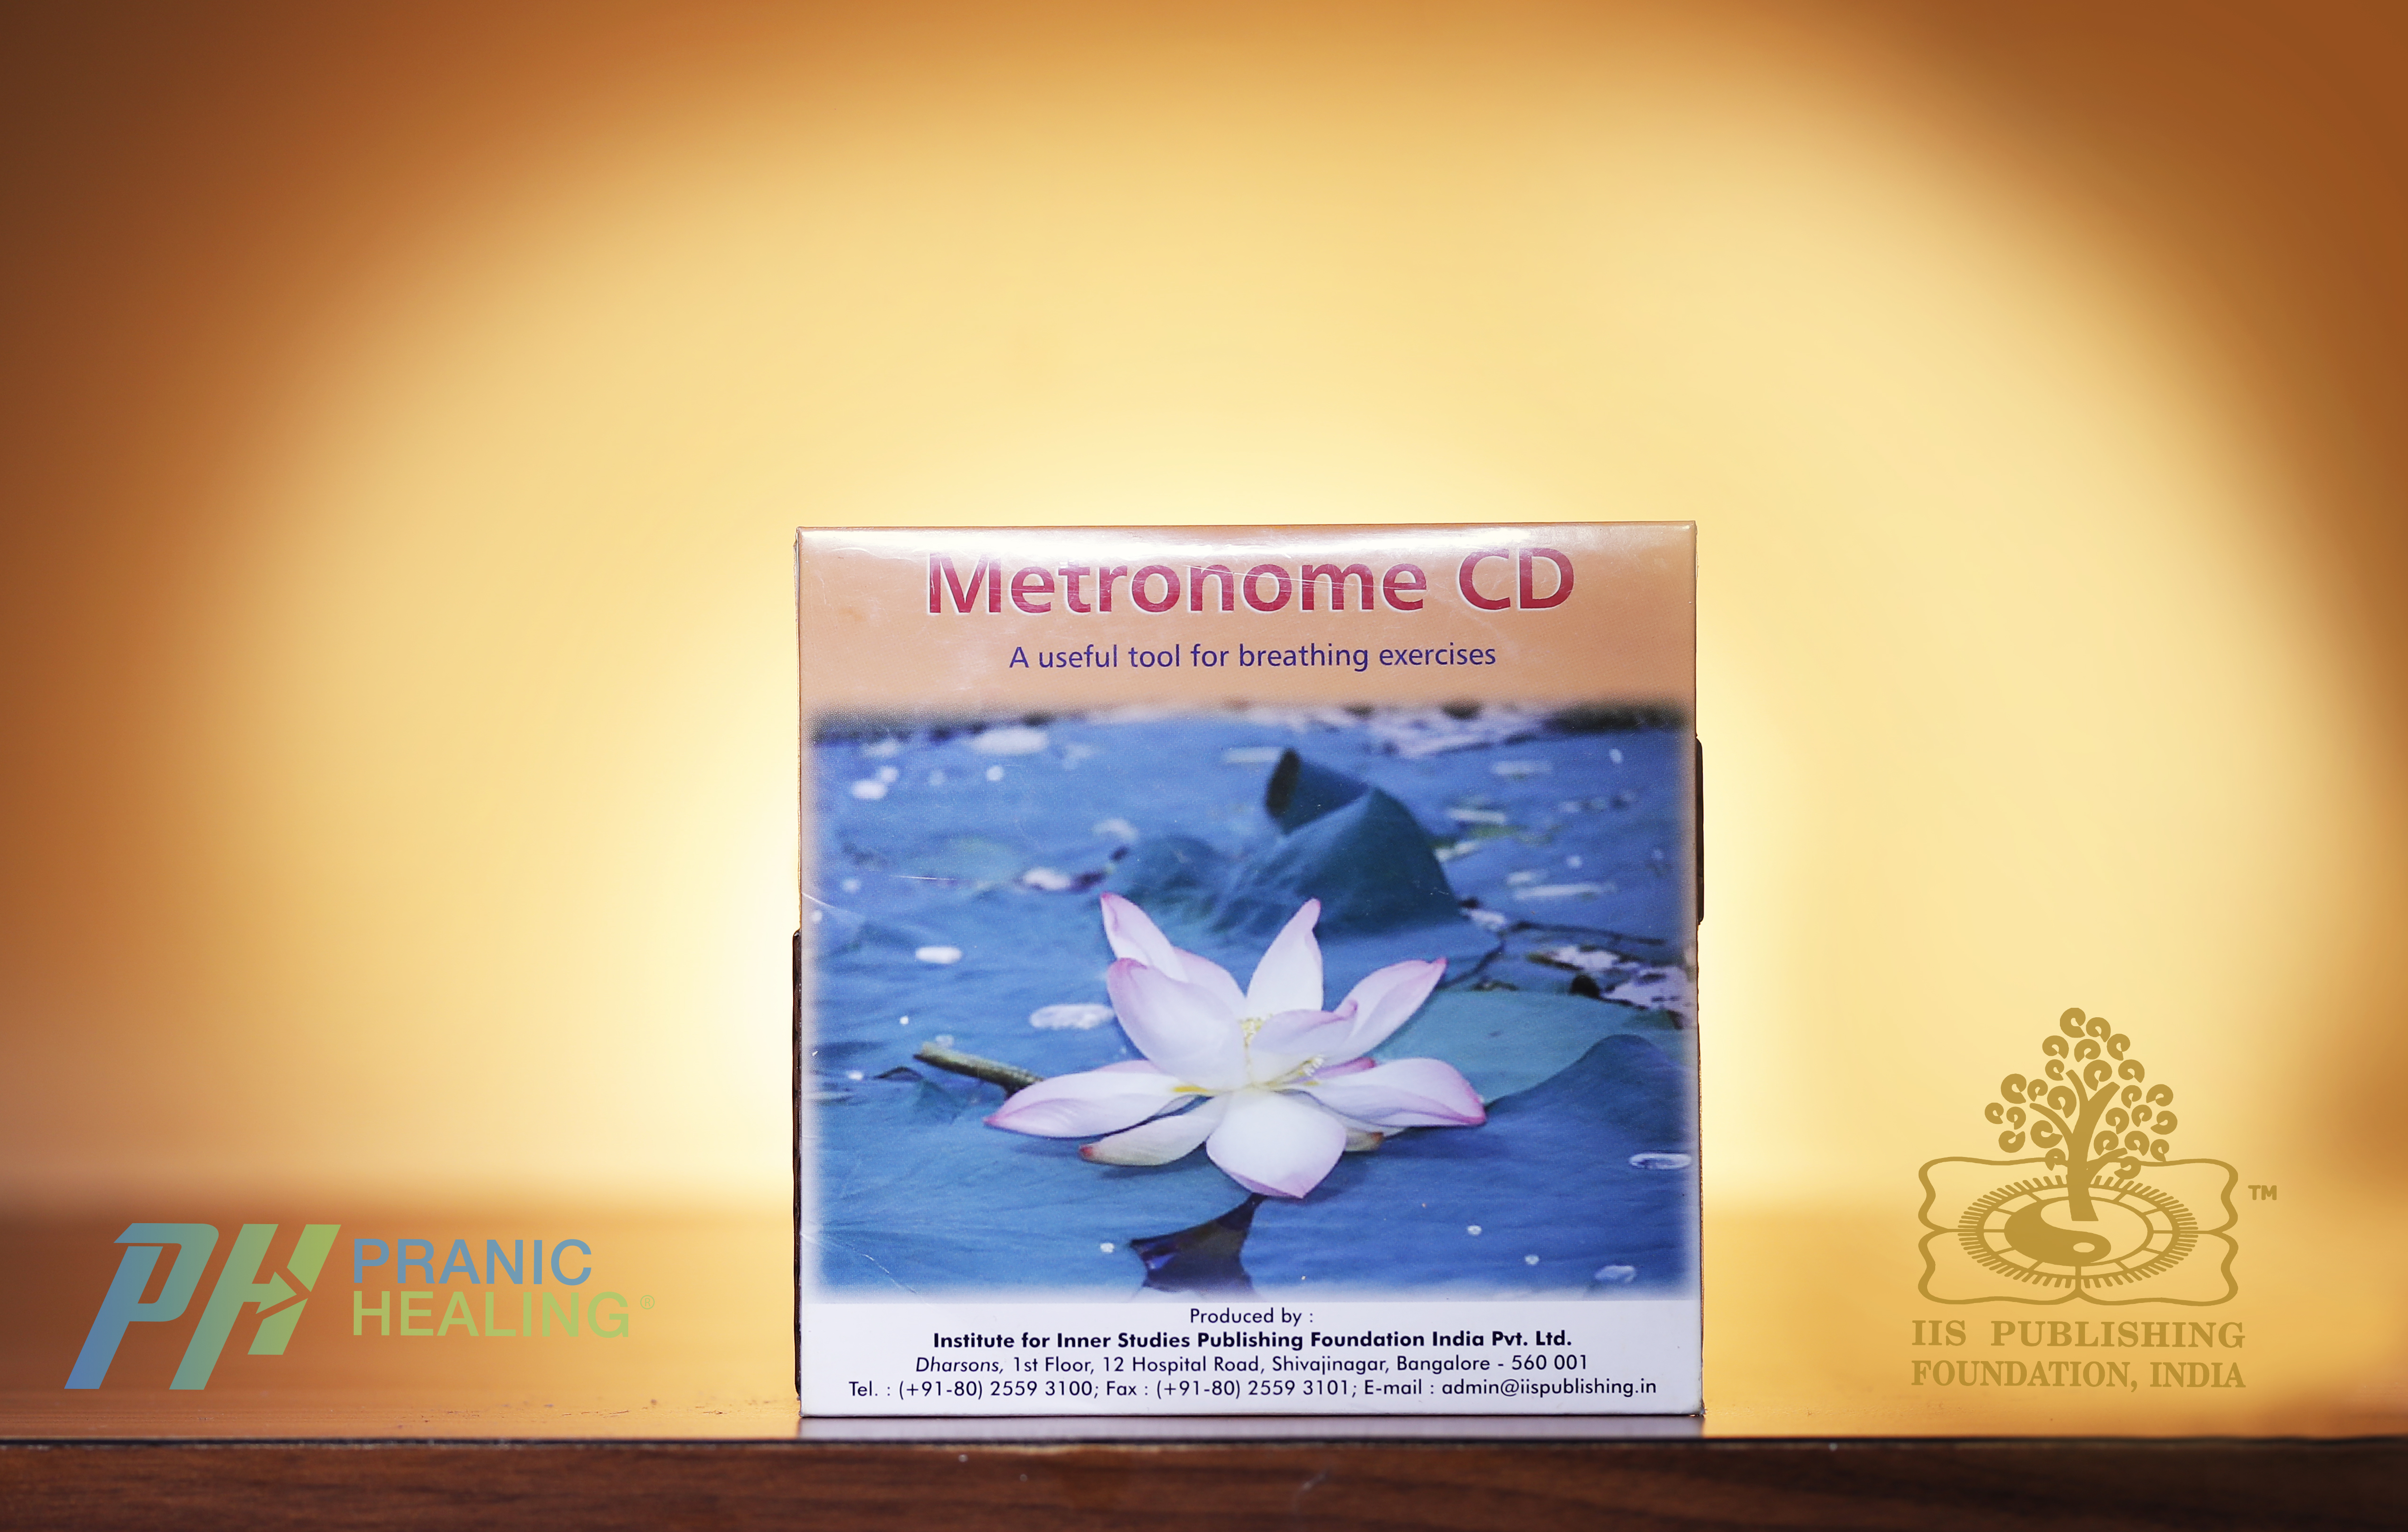 https://shop.pranichealingmumbai.com/products/metronome-cd